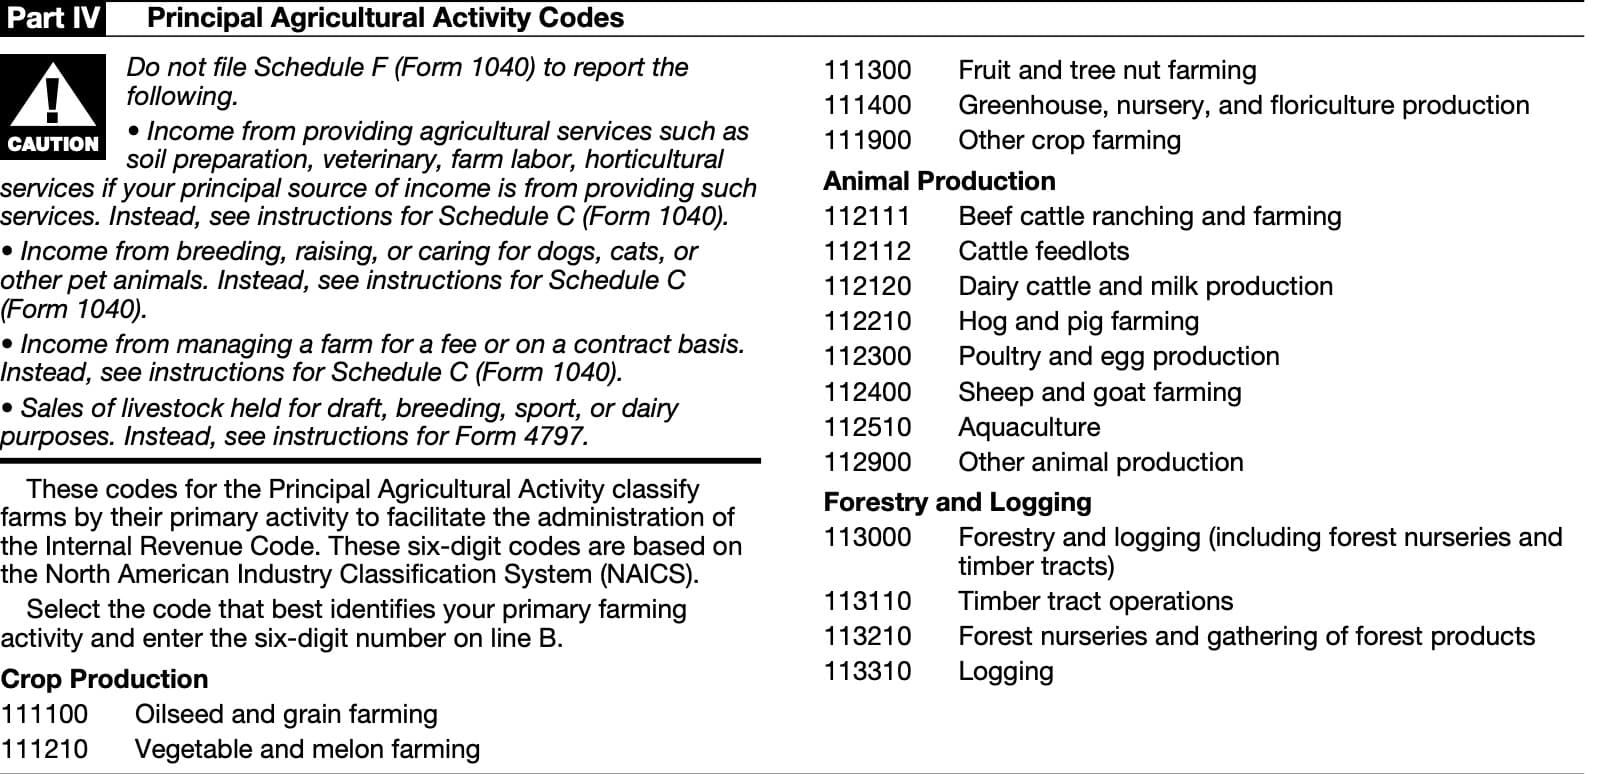 Part IV: principal agricultural activity codes